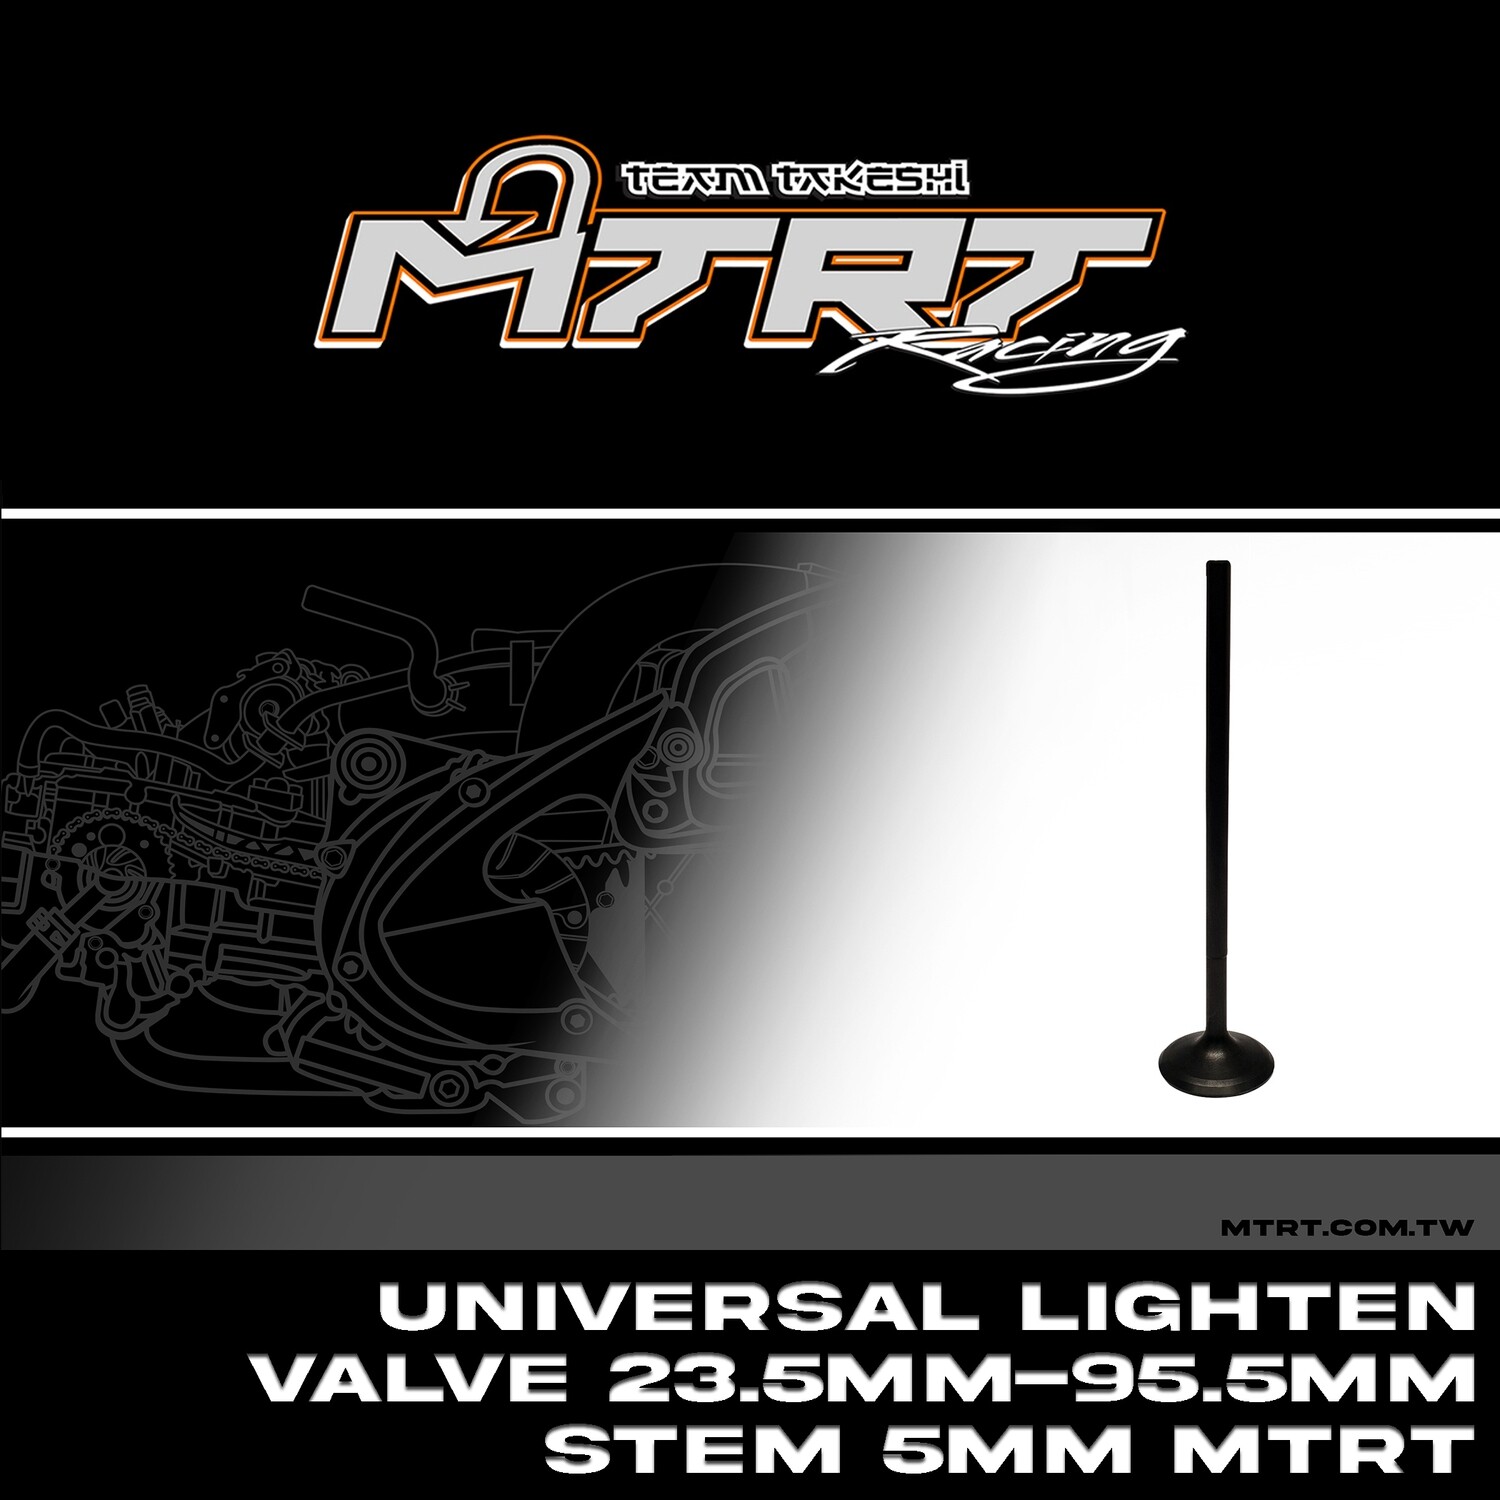 UNIVERSAL Lighten Valve 23.5MM-95.5MM Stem 5MM